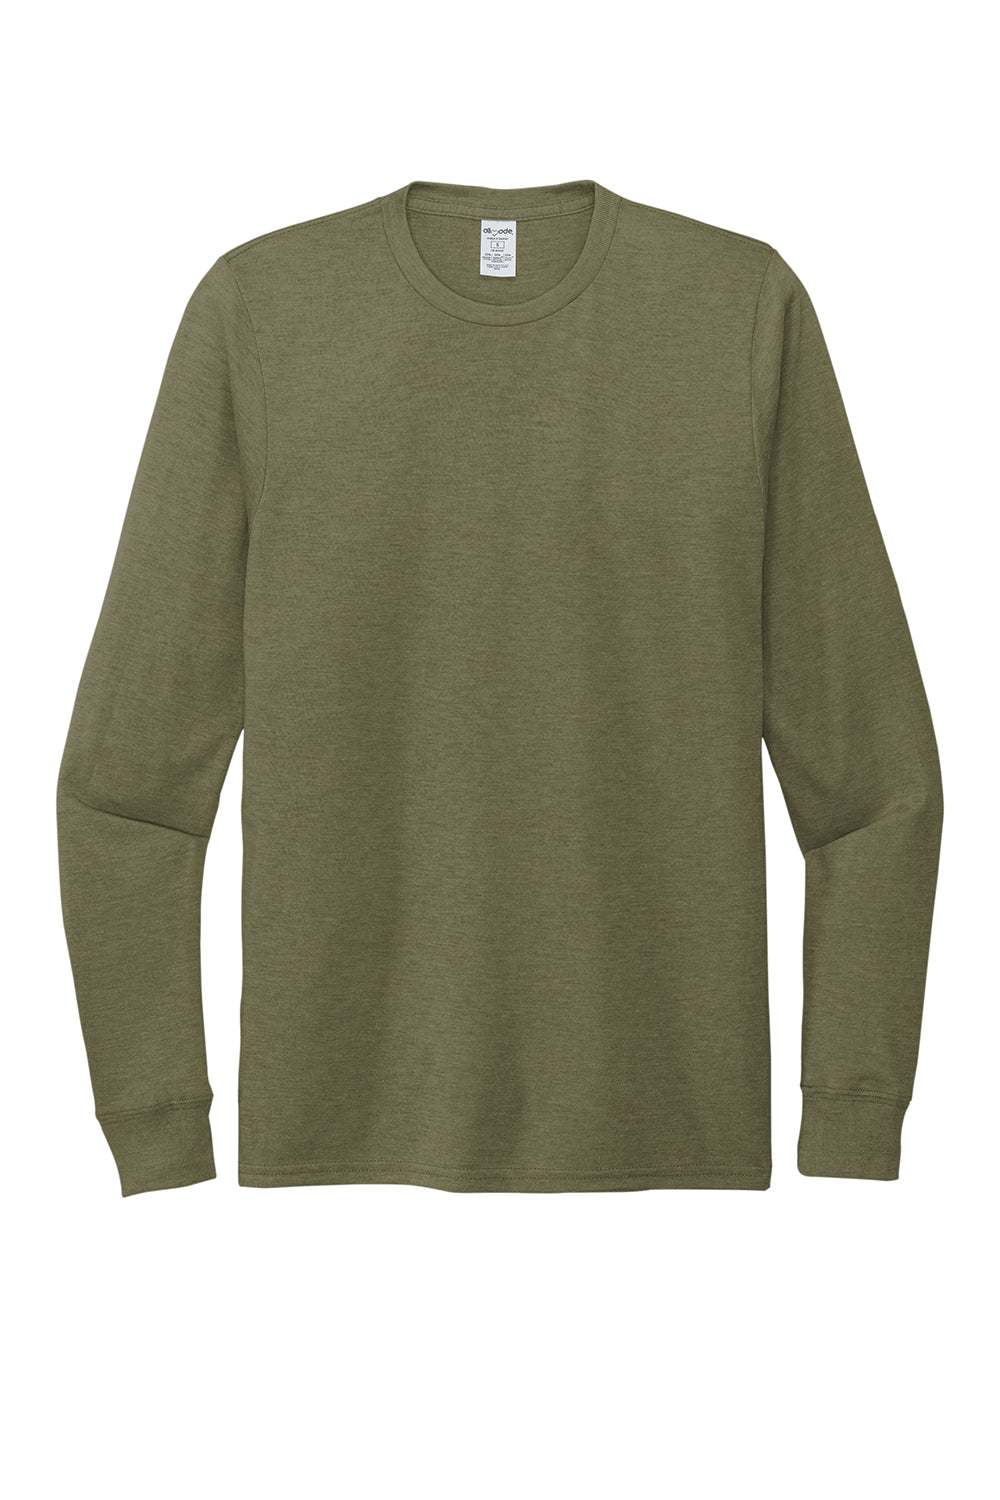 Allmade AL6004 Mens Long Sleeve Crewneck T-Shirt Olive You Green Flat Front